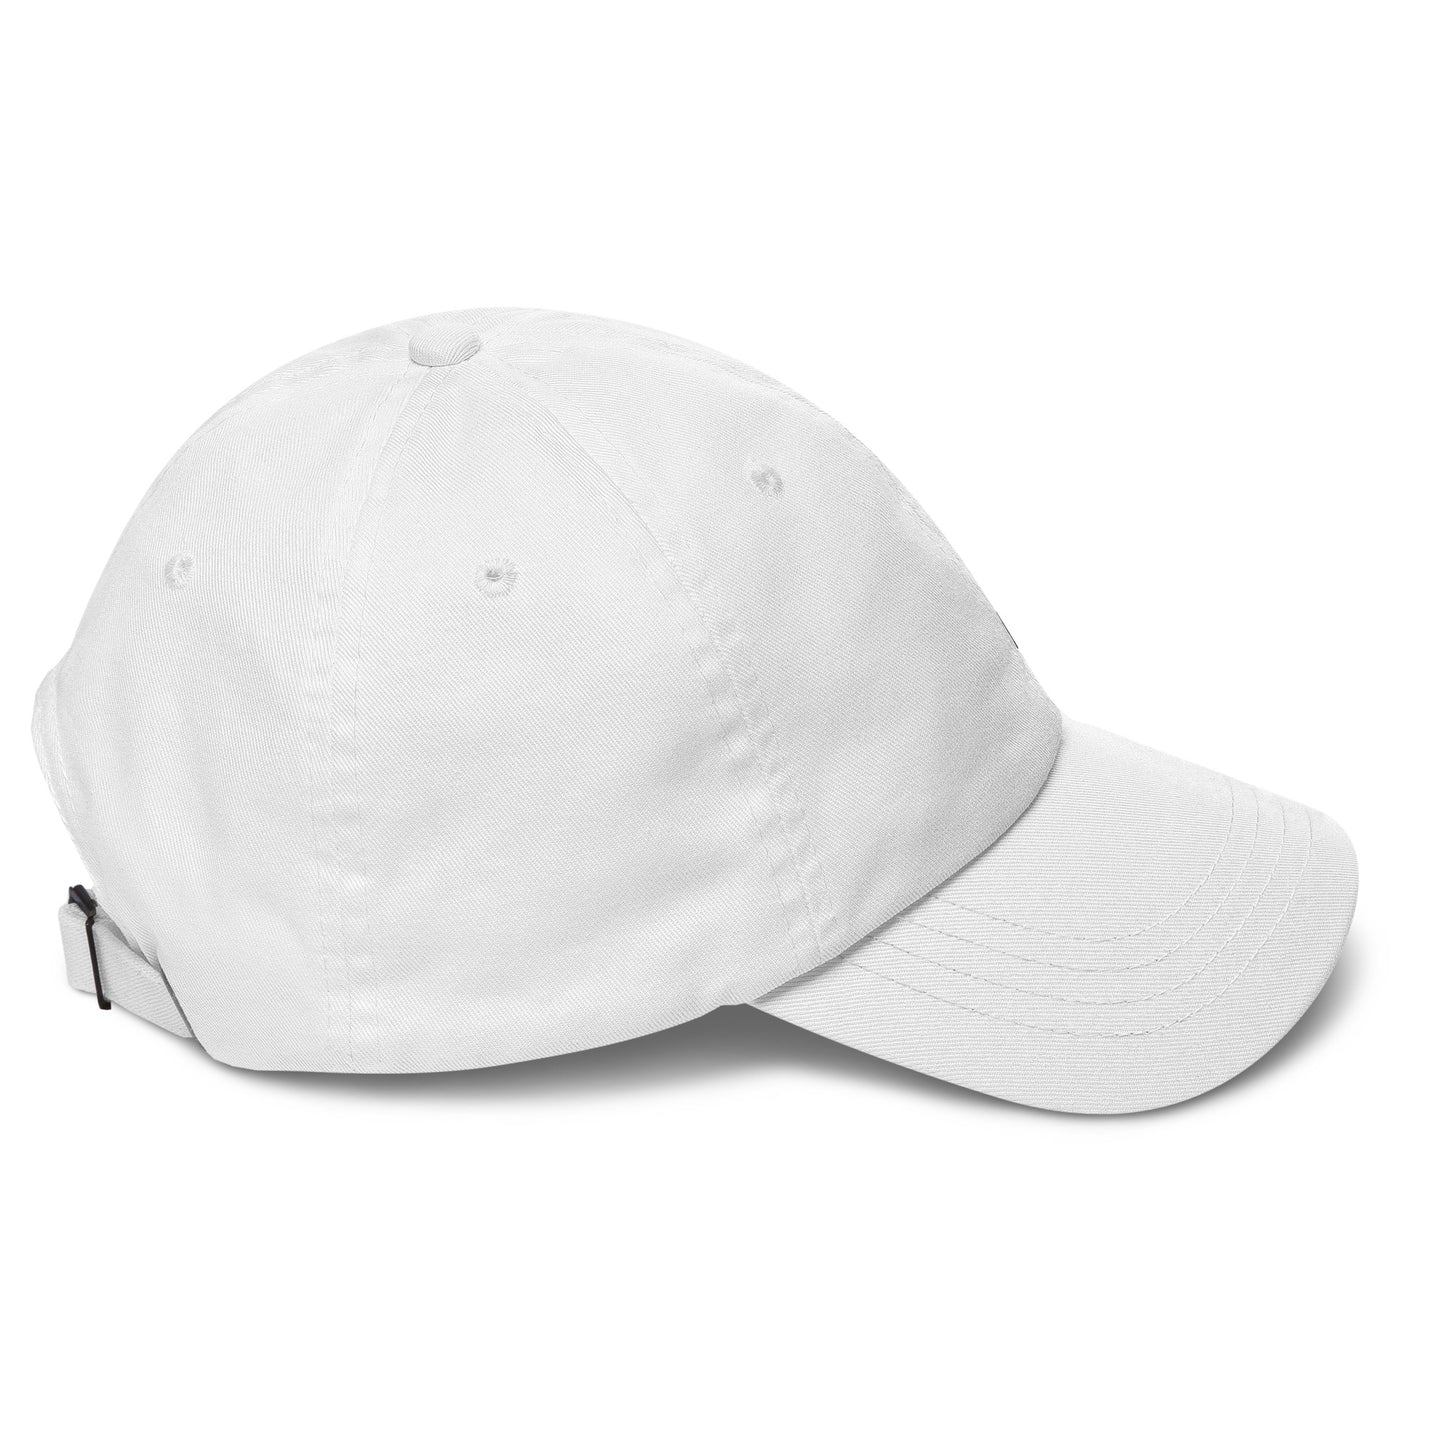 Leading Edge - White Hat